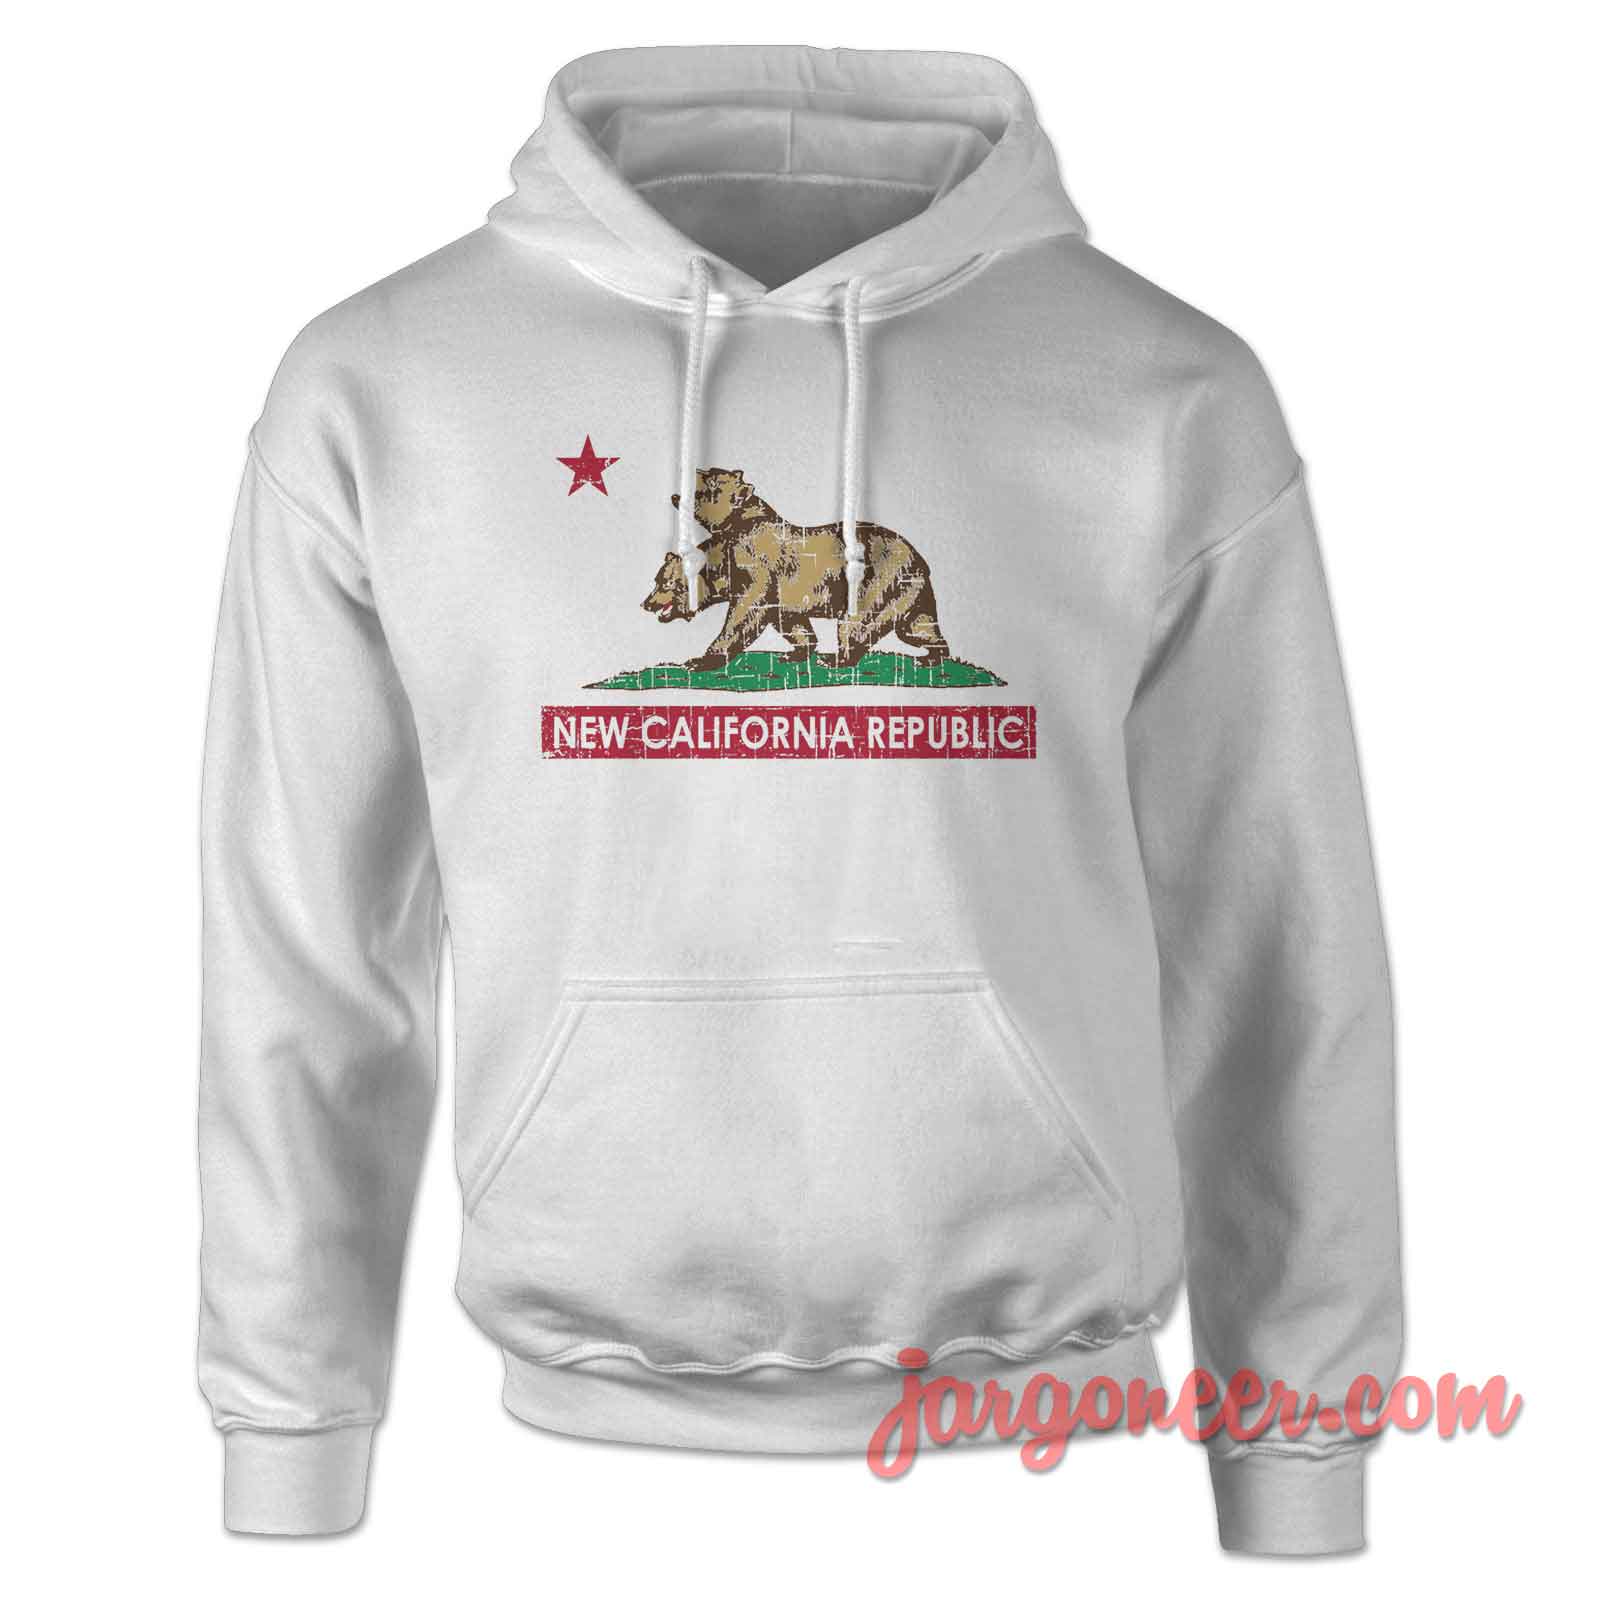 New California Republic - Shop Unique Graphic Cool Shirt Designs